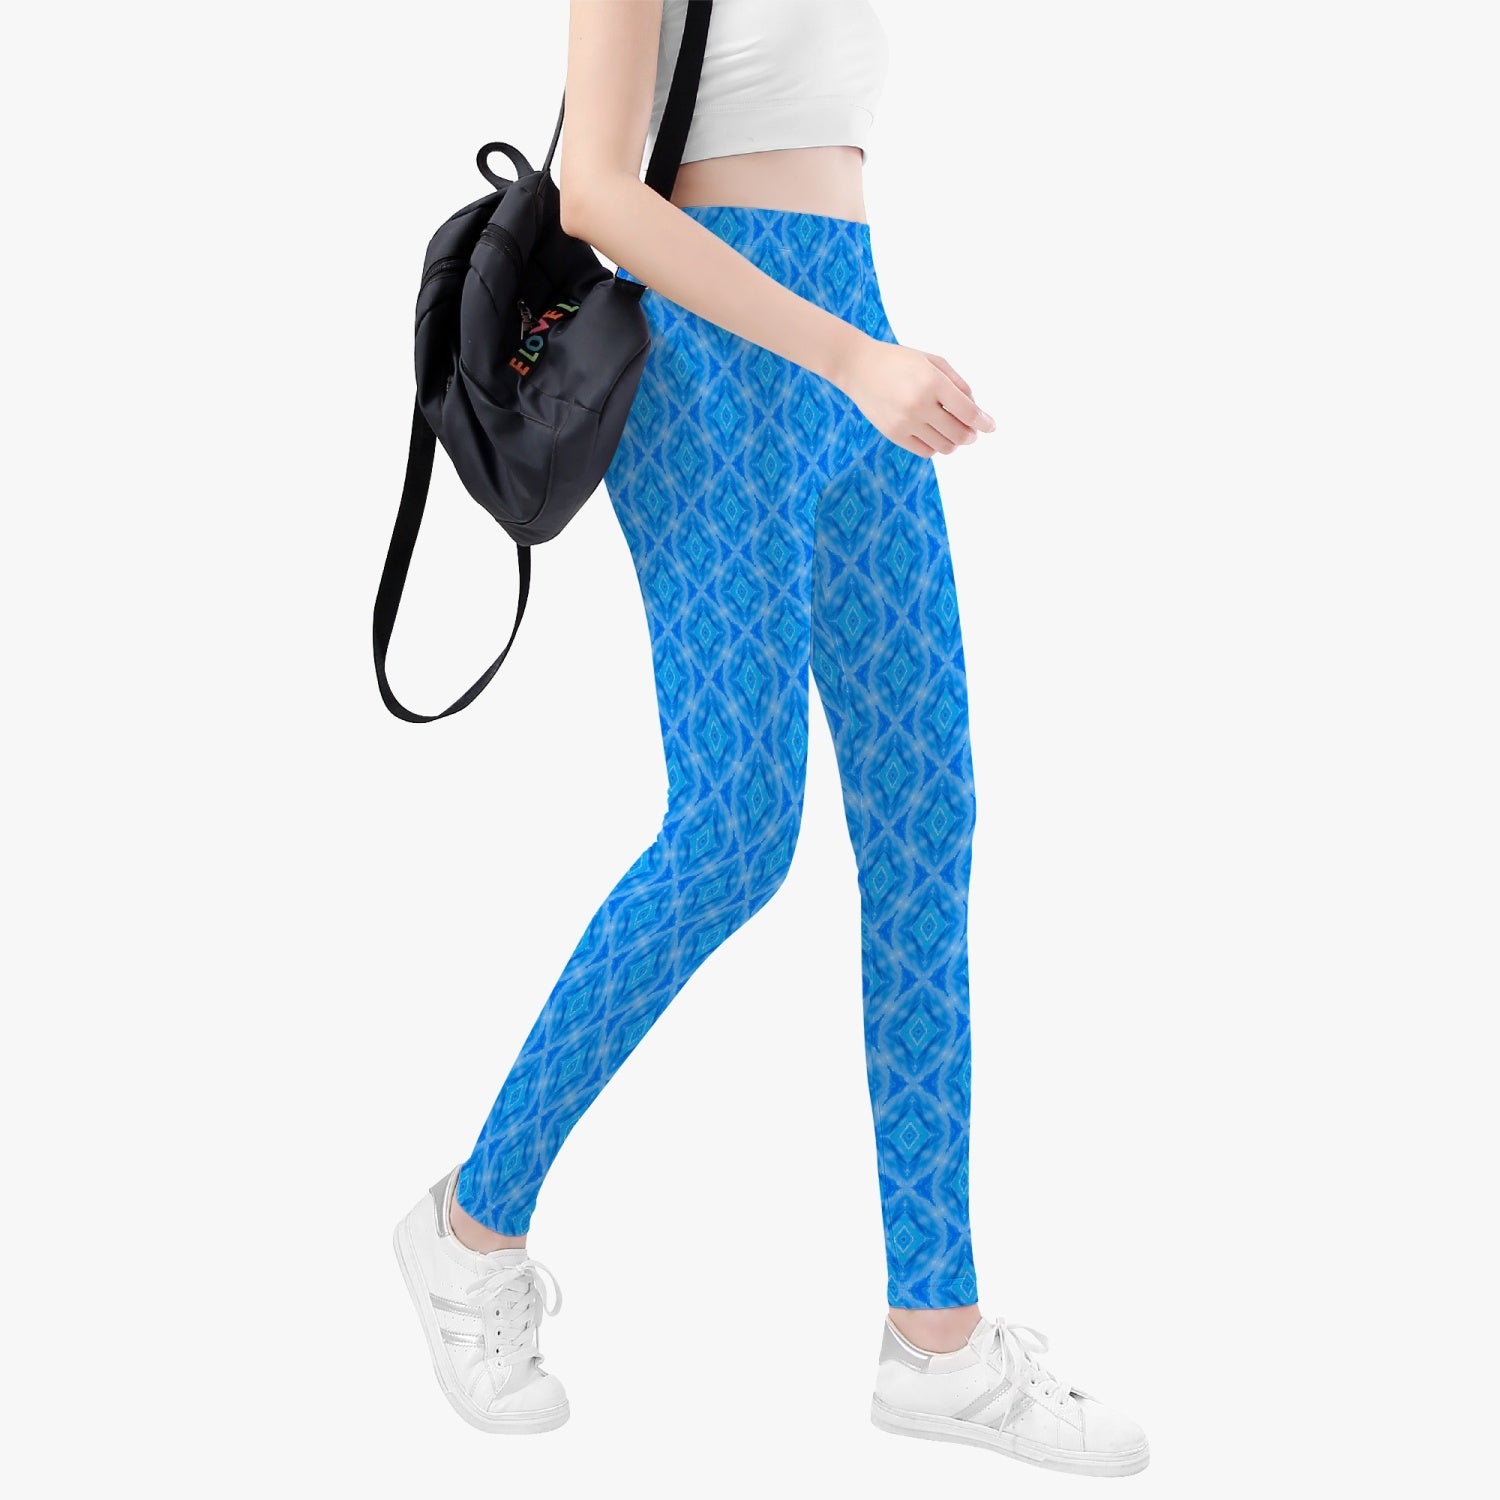 Blue Air Throat Chacra Yoga Pants, by Sensus Studio Design